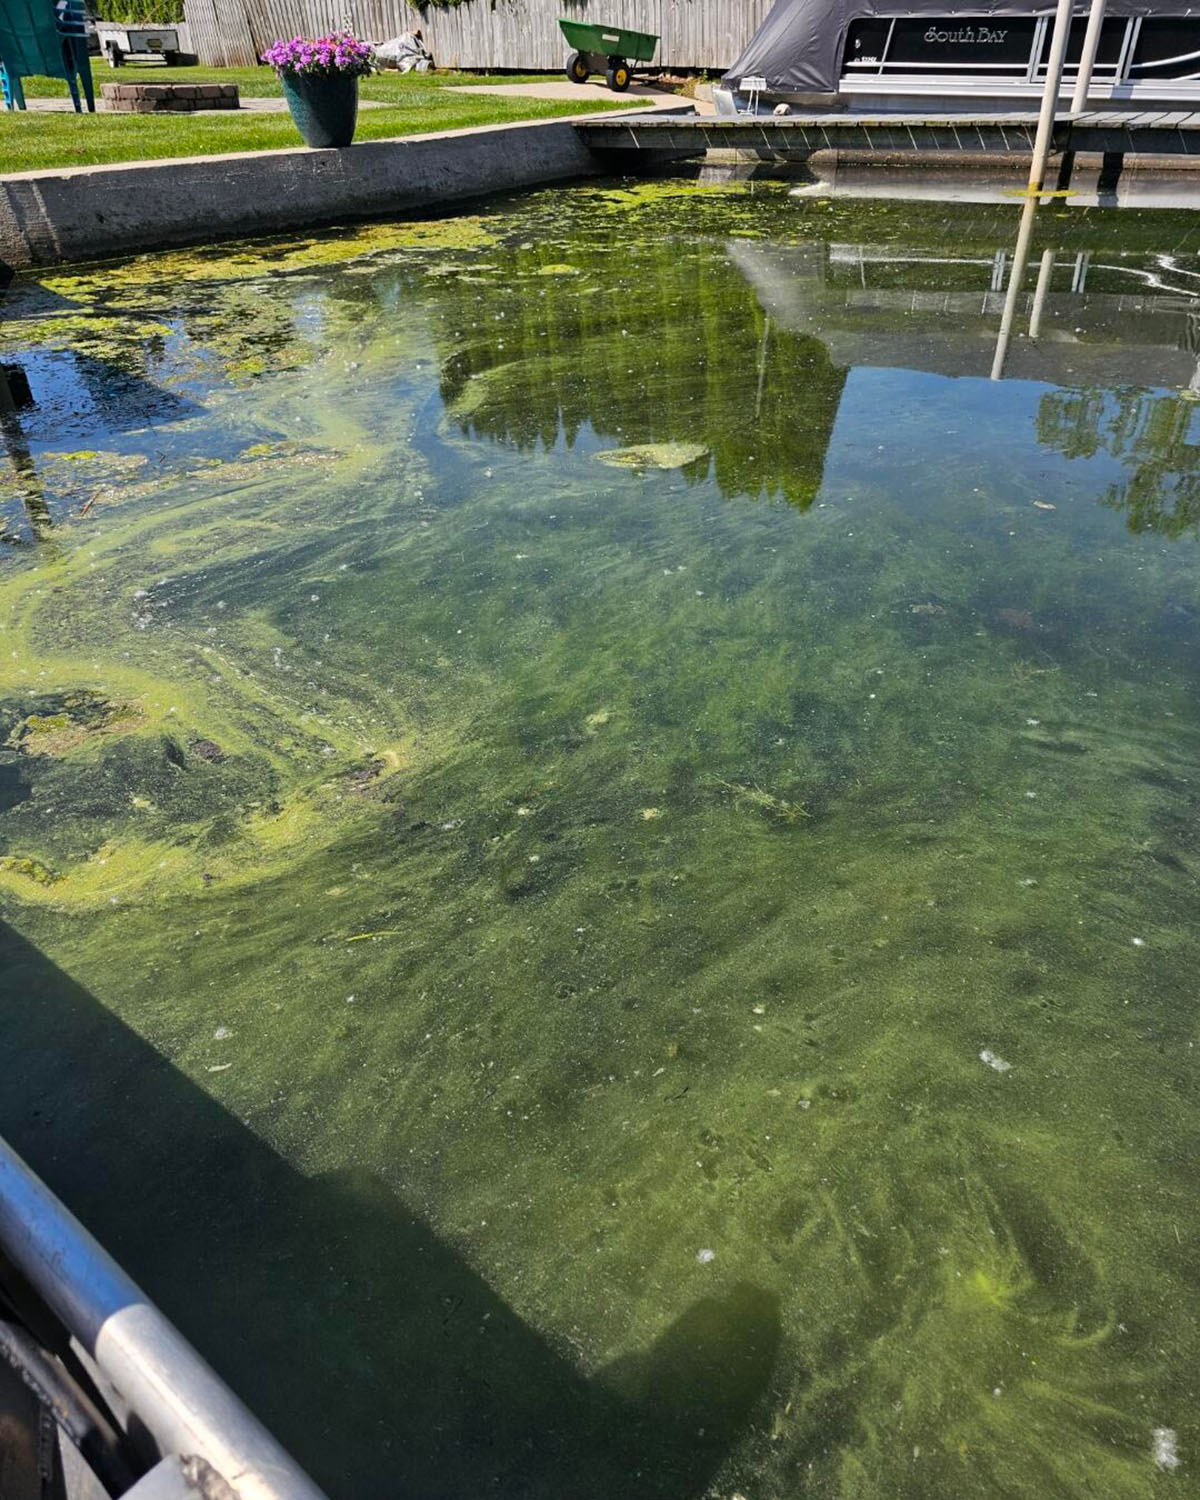 Toxic blue-green algae bloom identified on Big Chapman Lake